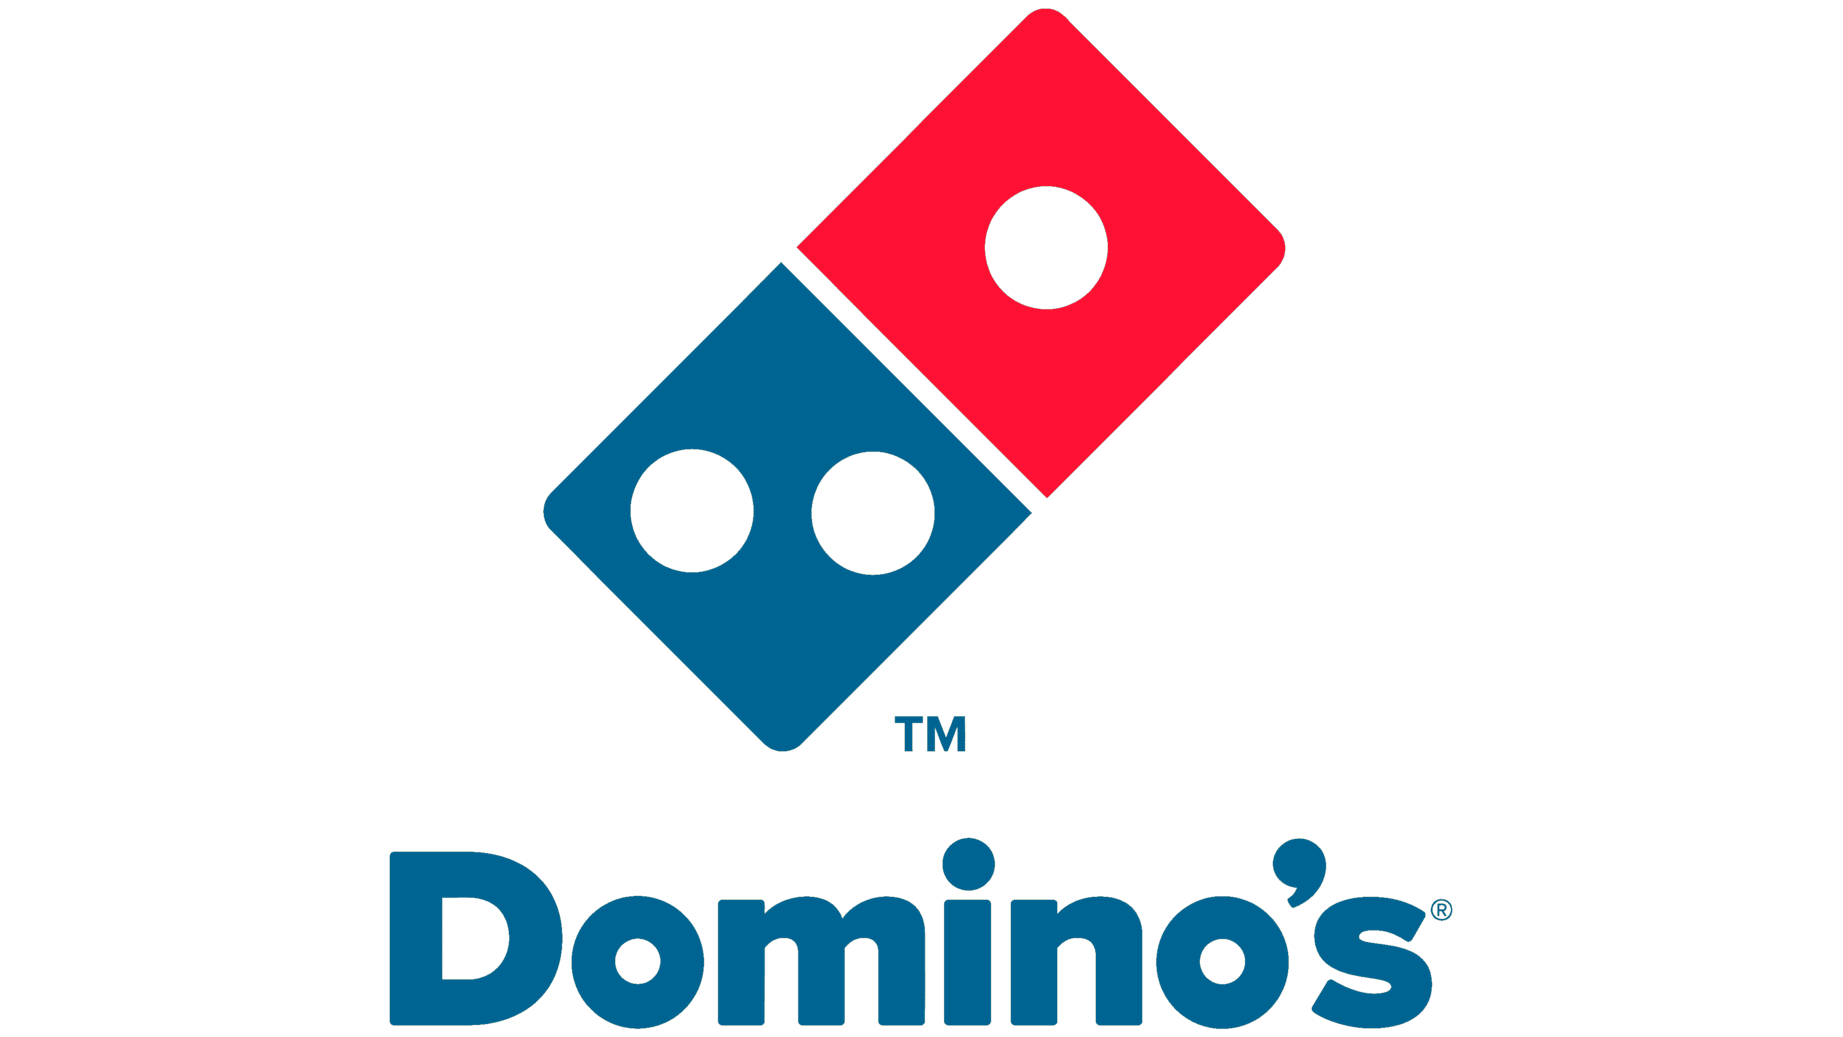 Dominos pizza symbol